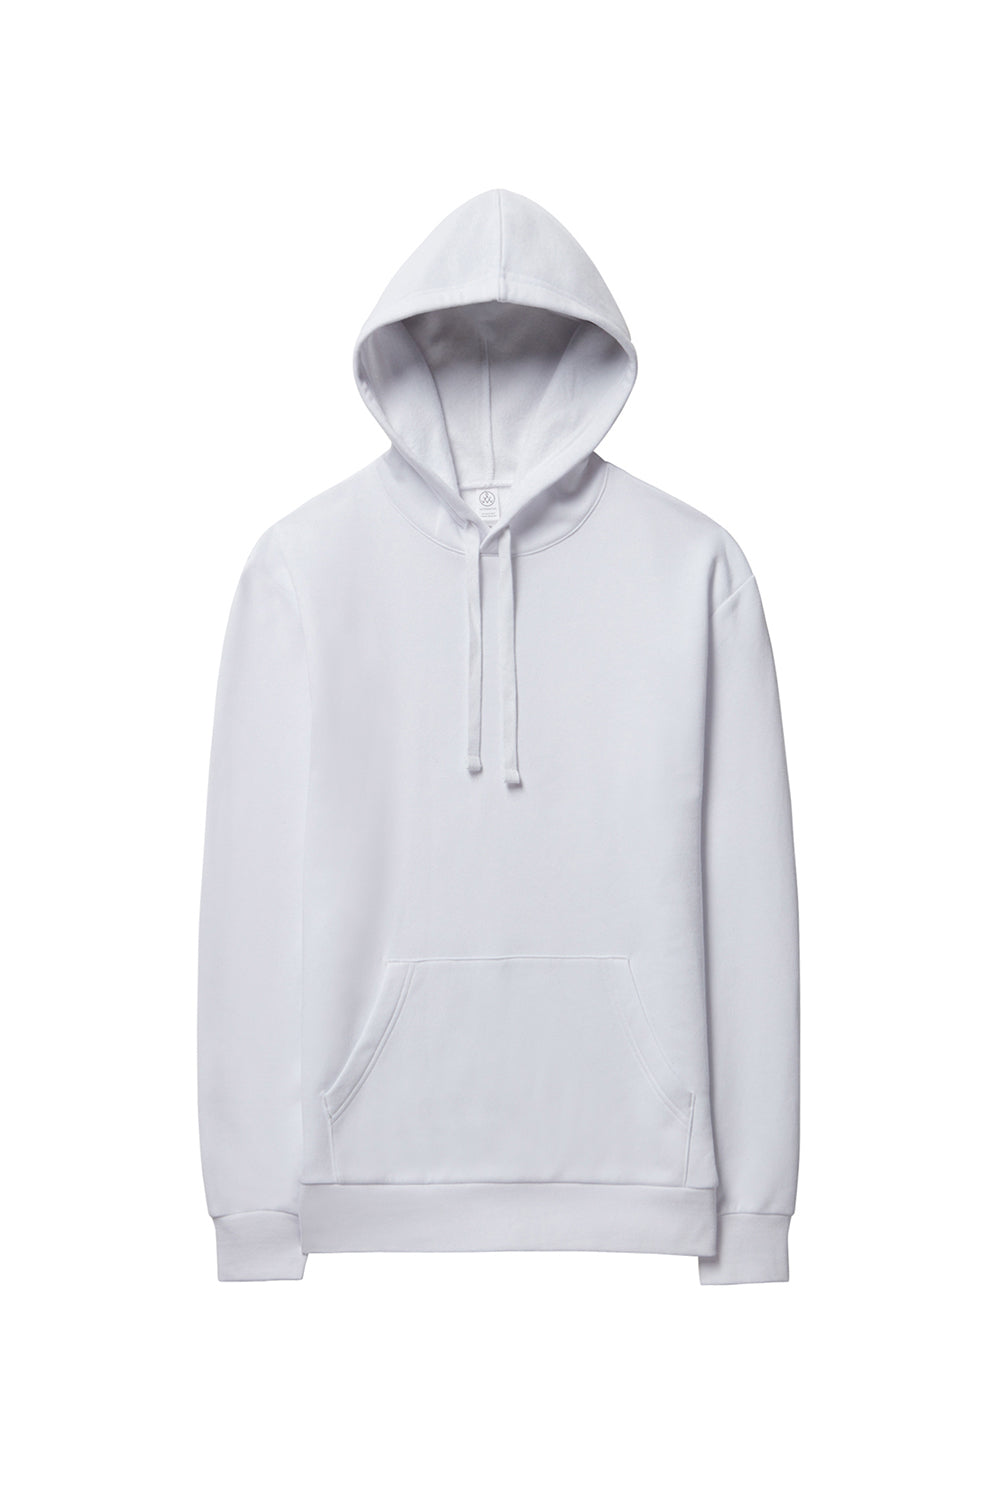 Alternative 8804PF Mens Eco Cozy Fleece Hooded Sweatshirt Hoodie White Flat Front